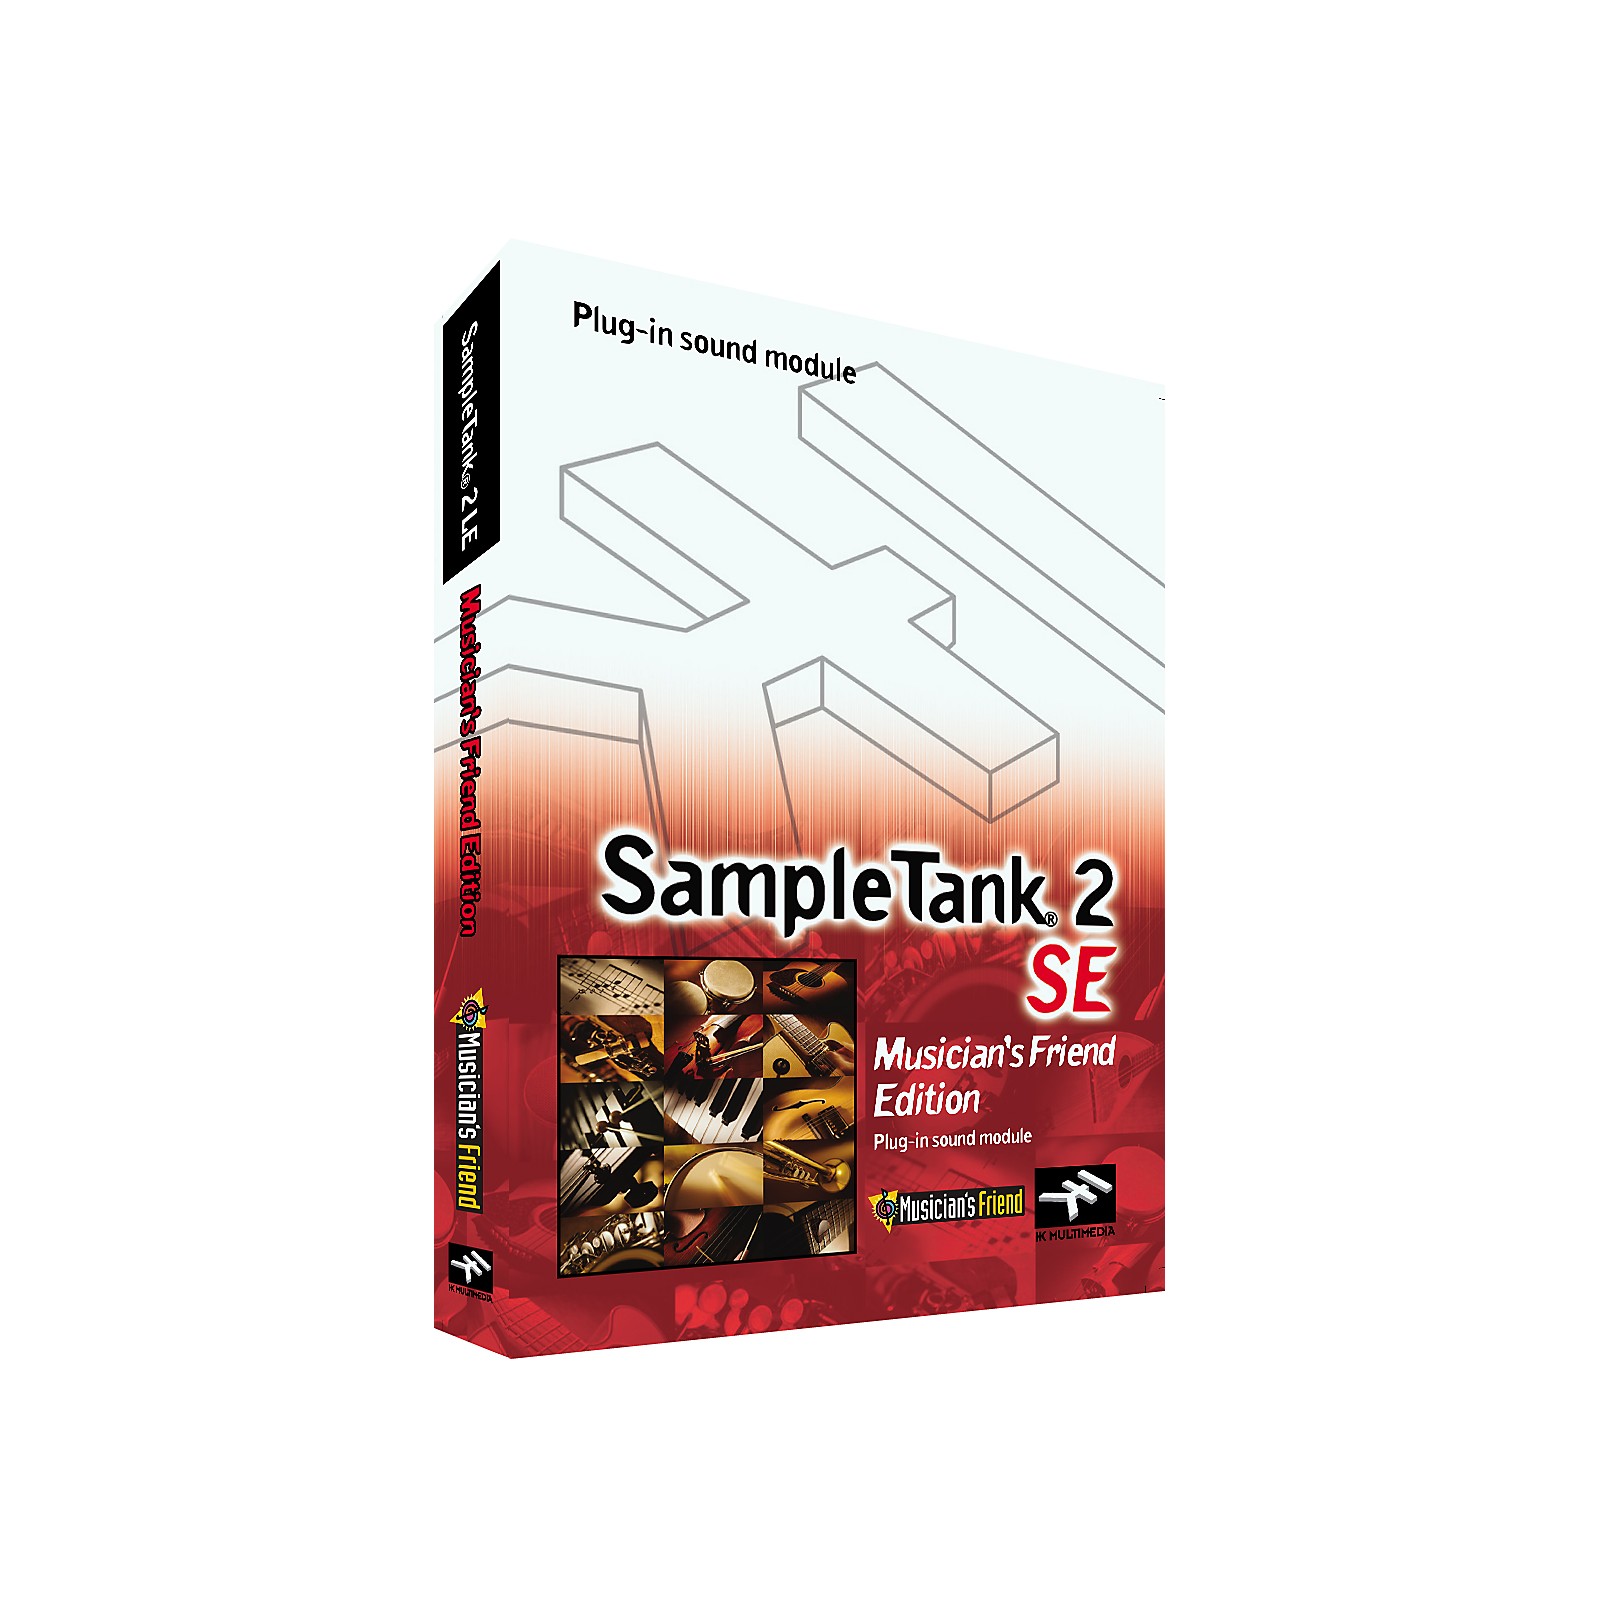 sampletank review